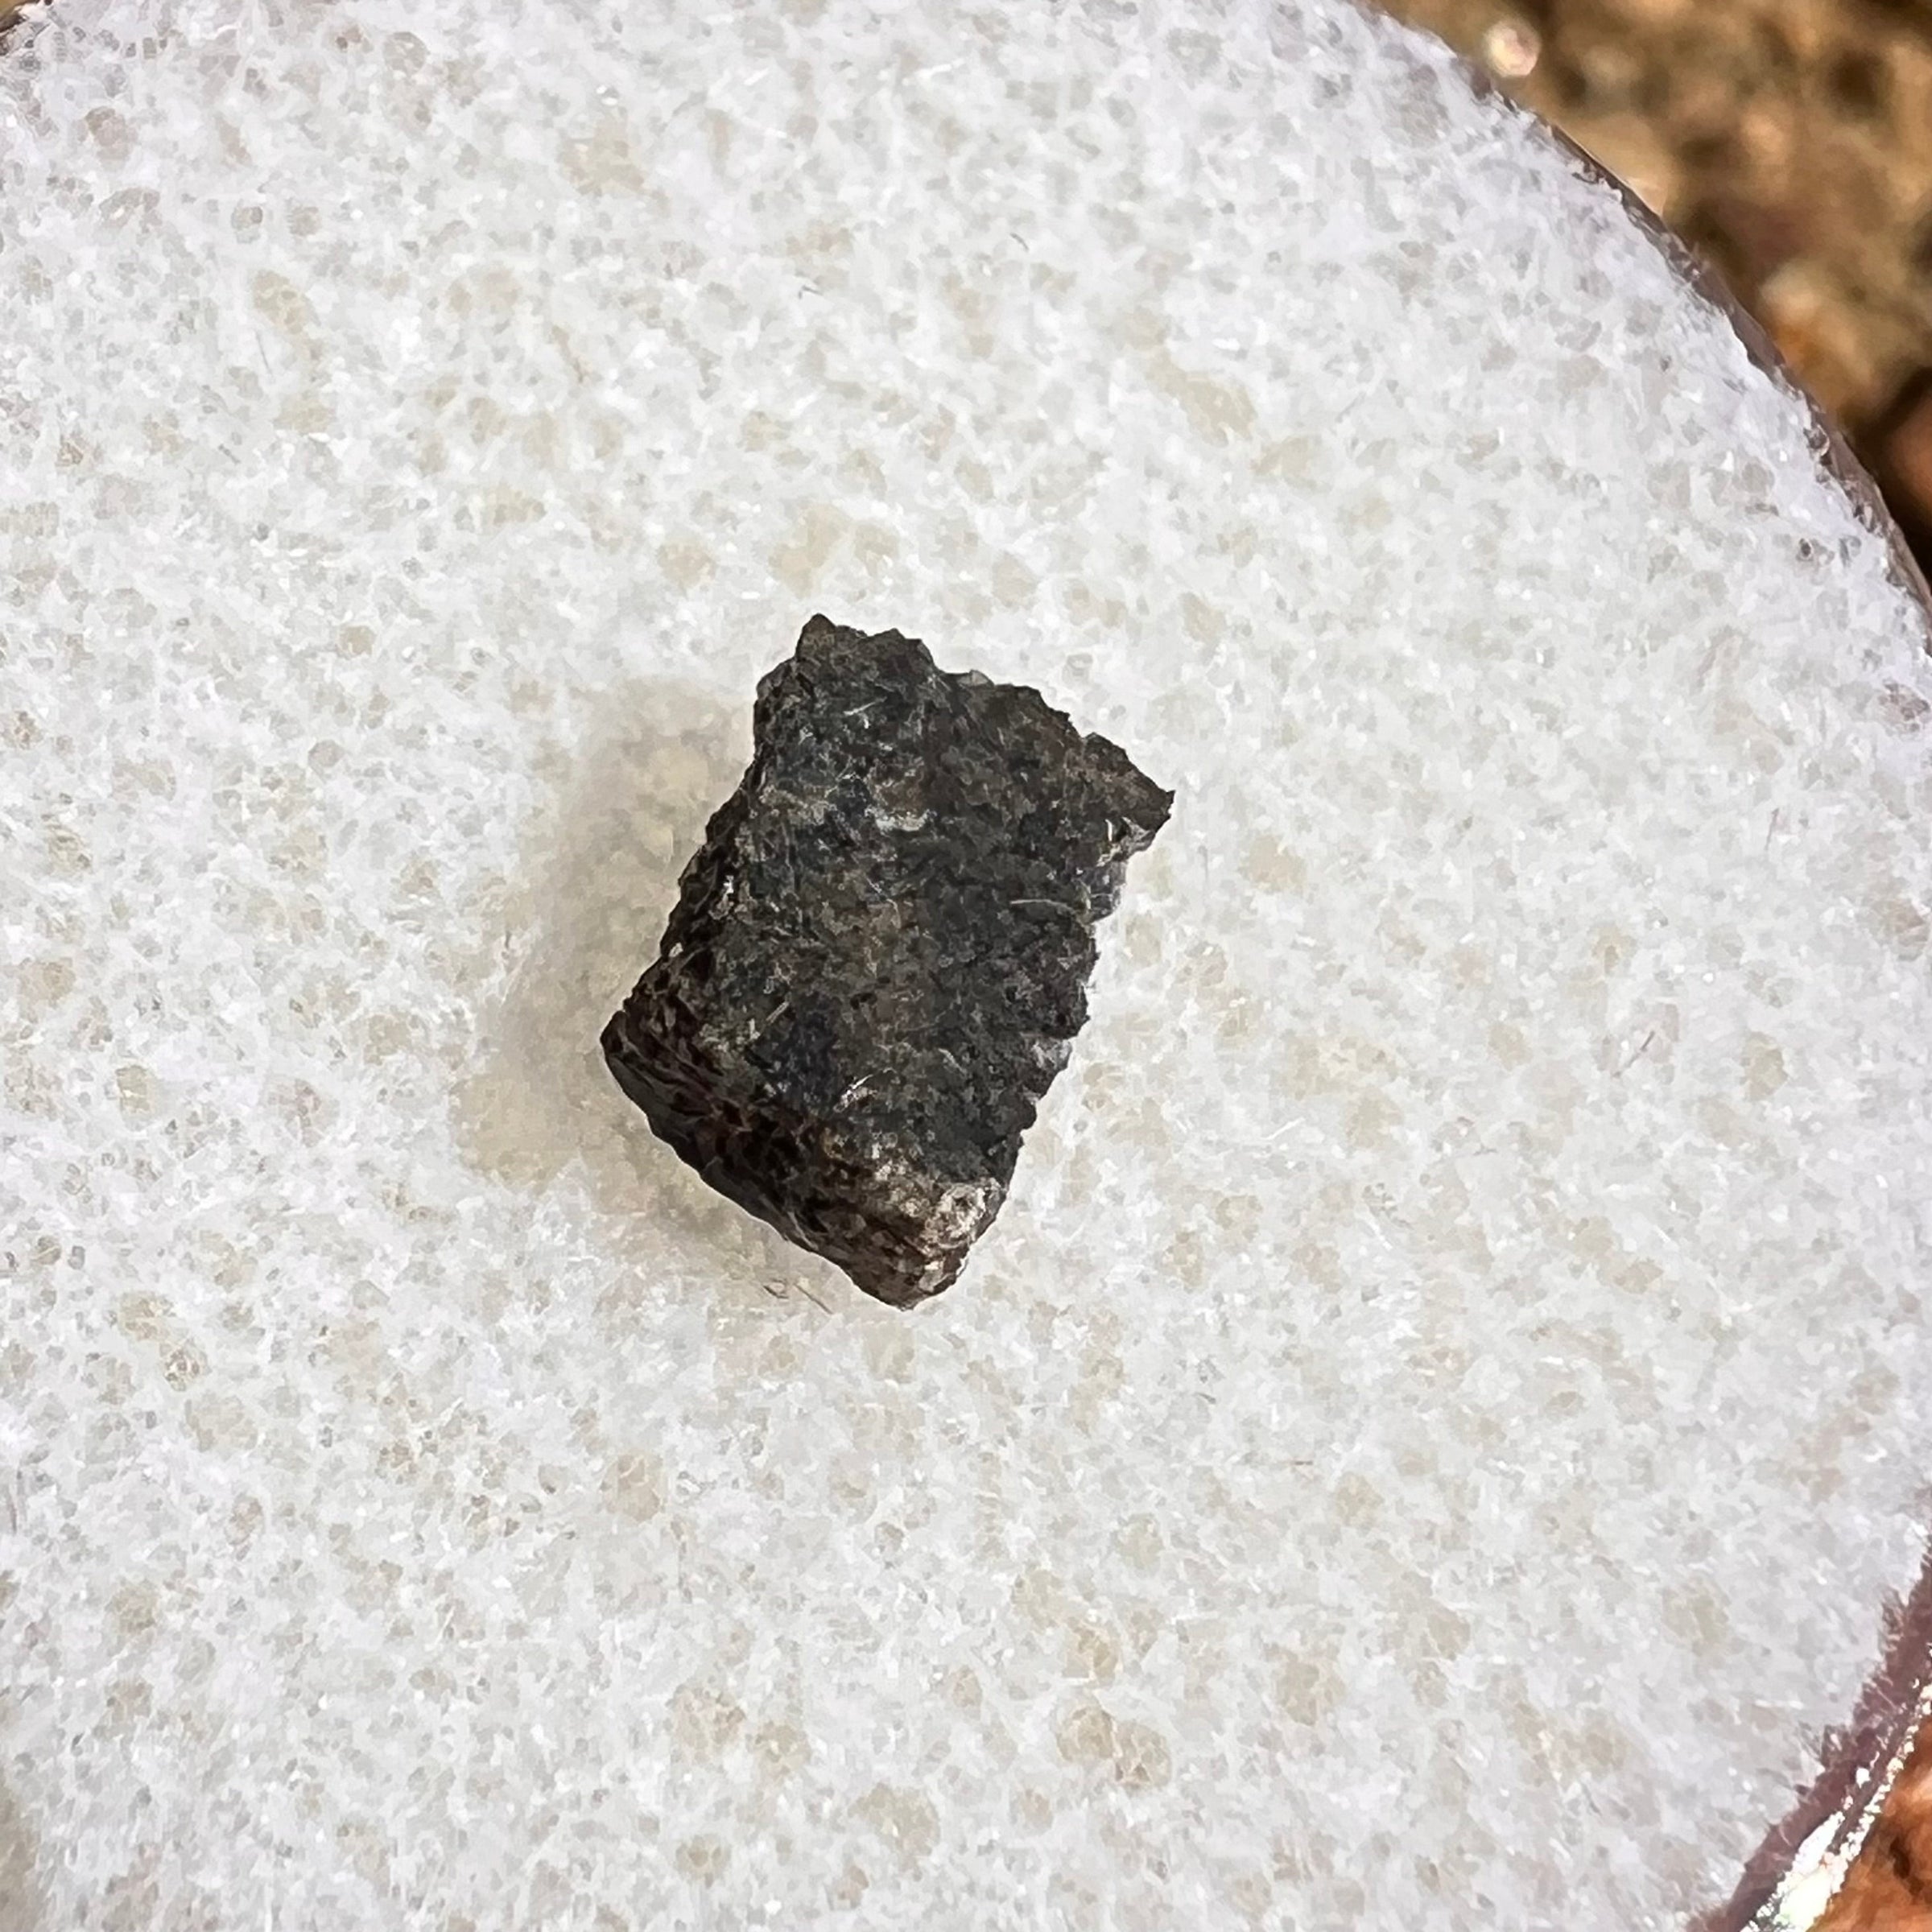 NWA 12269 Mars Meteorite small fragment #41-Moldavite Life